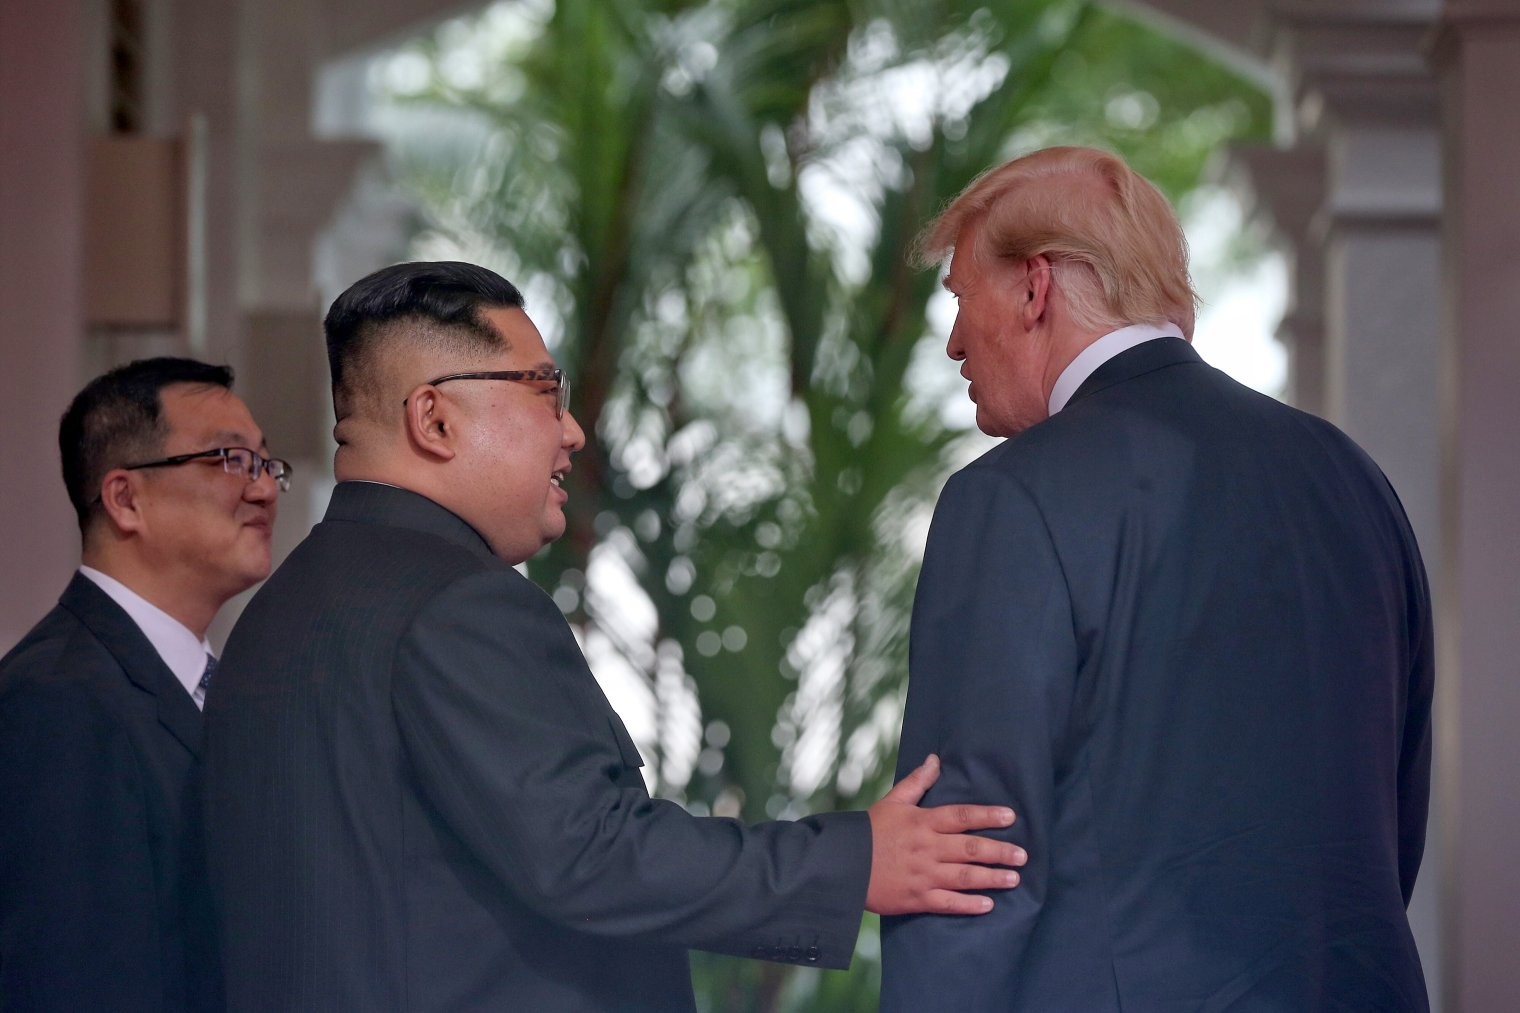 Trump and Kim in Singapore